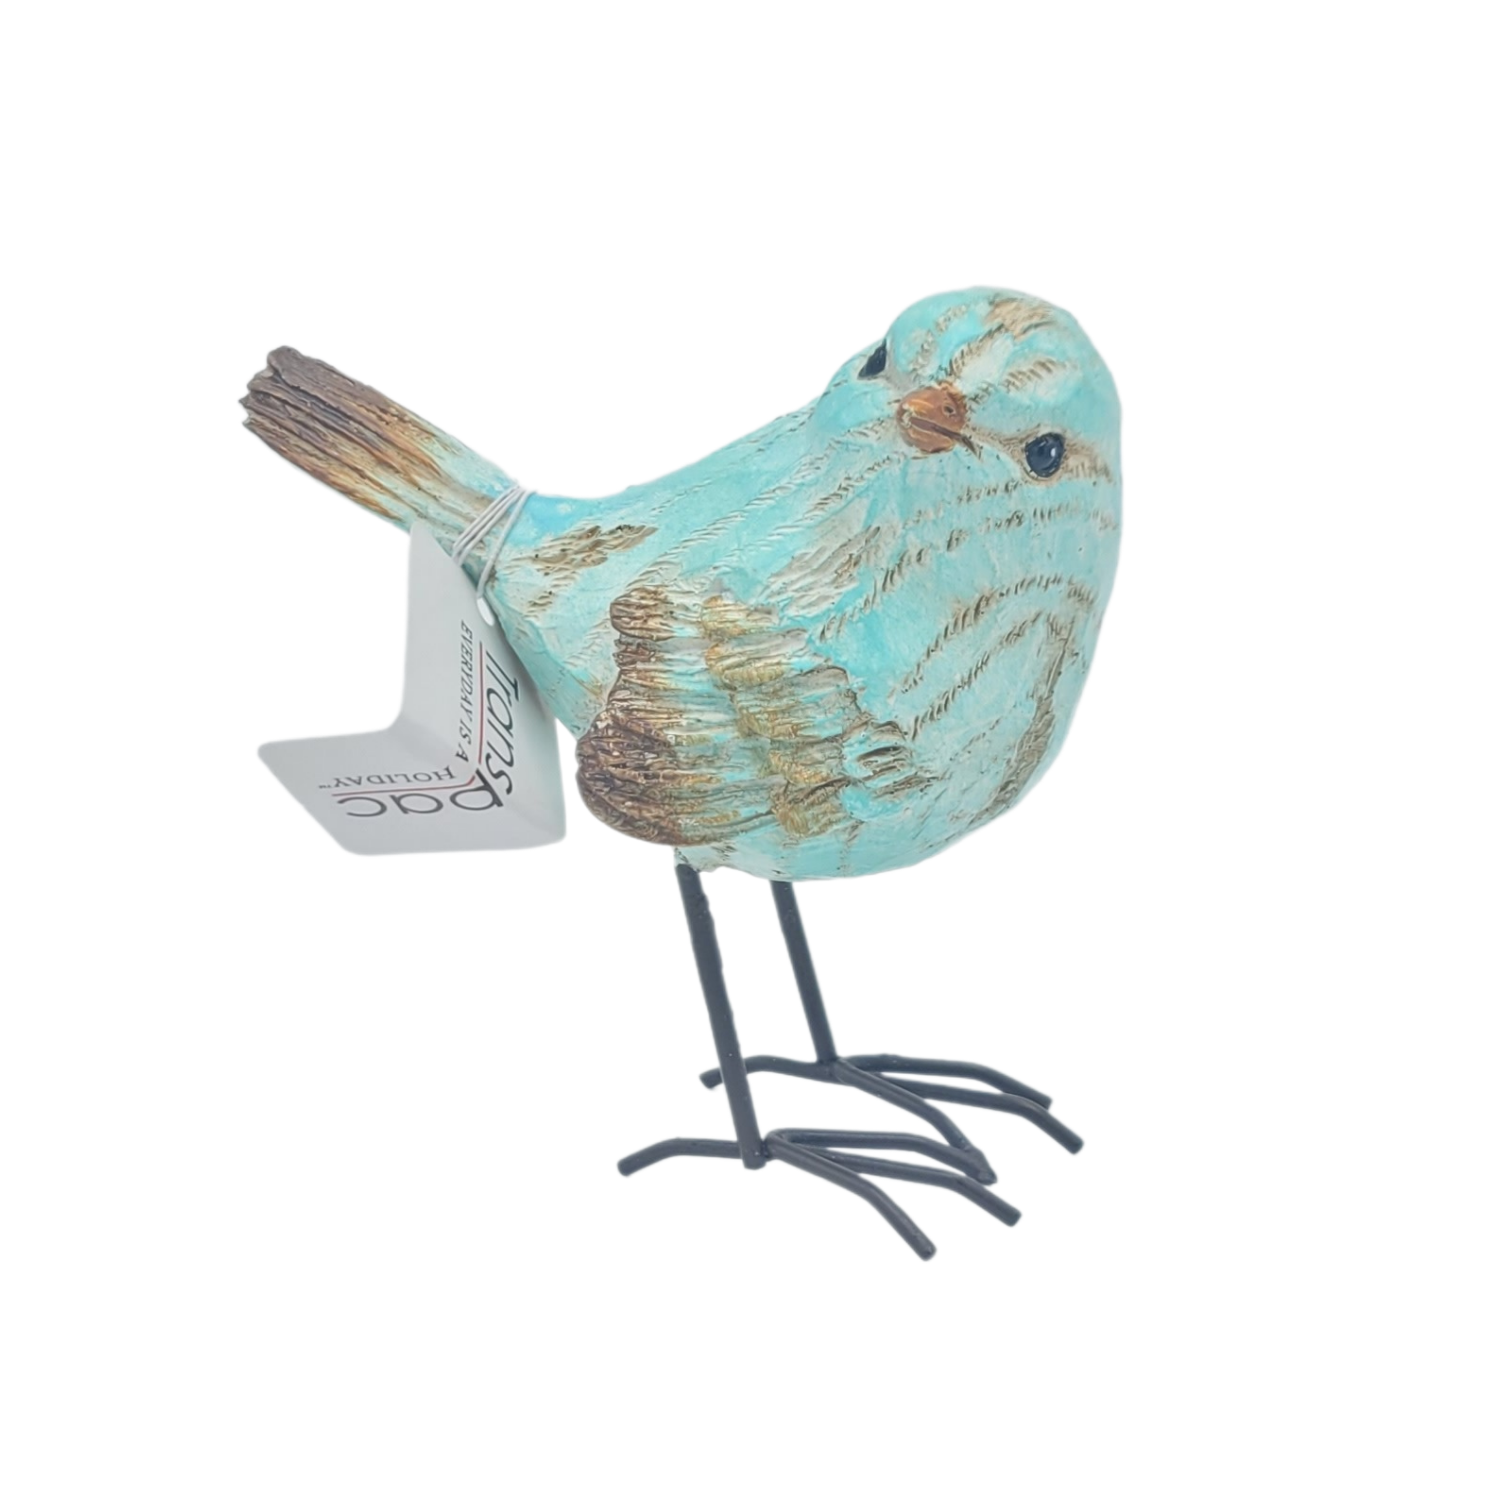 Rustic Resin Bird with Metal Feet